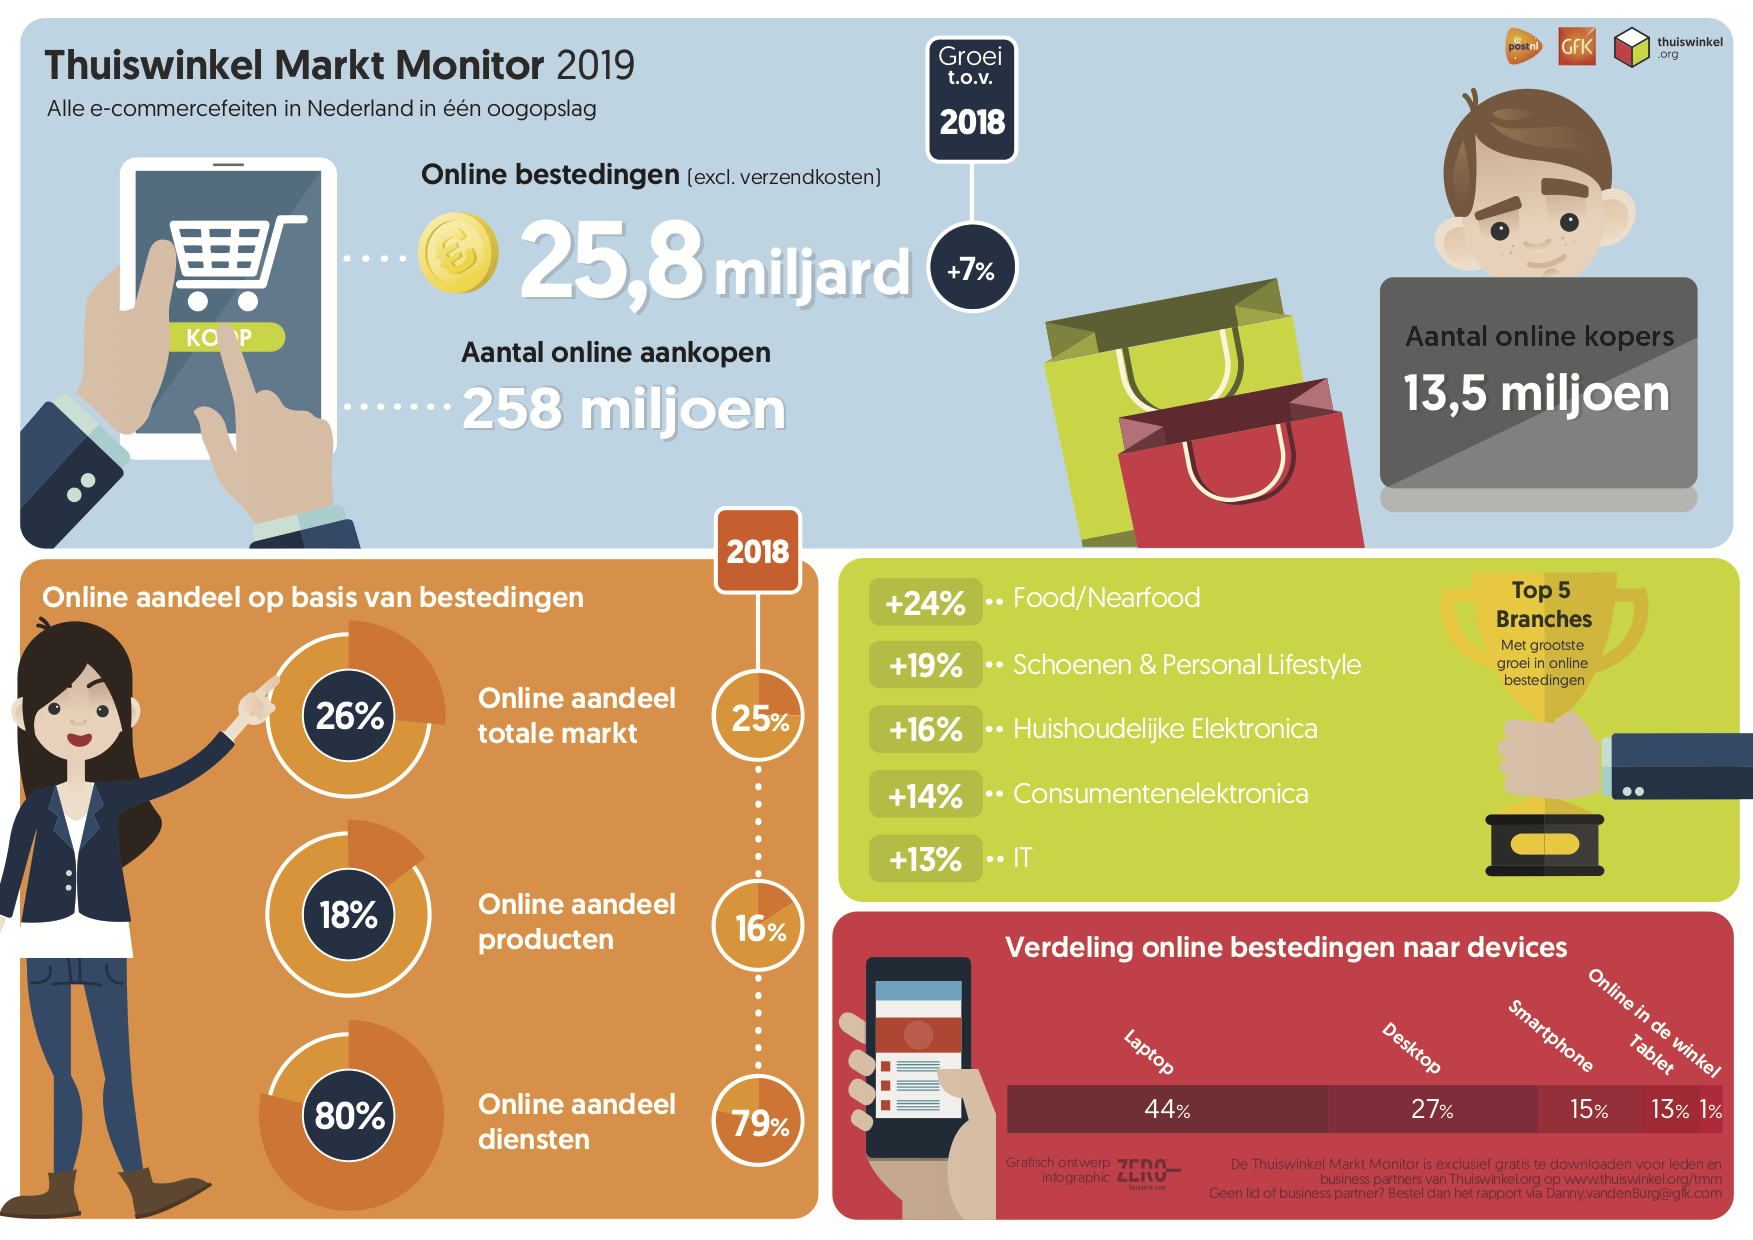 Thuiswinkel Markt Monitor 2019